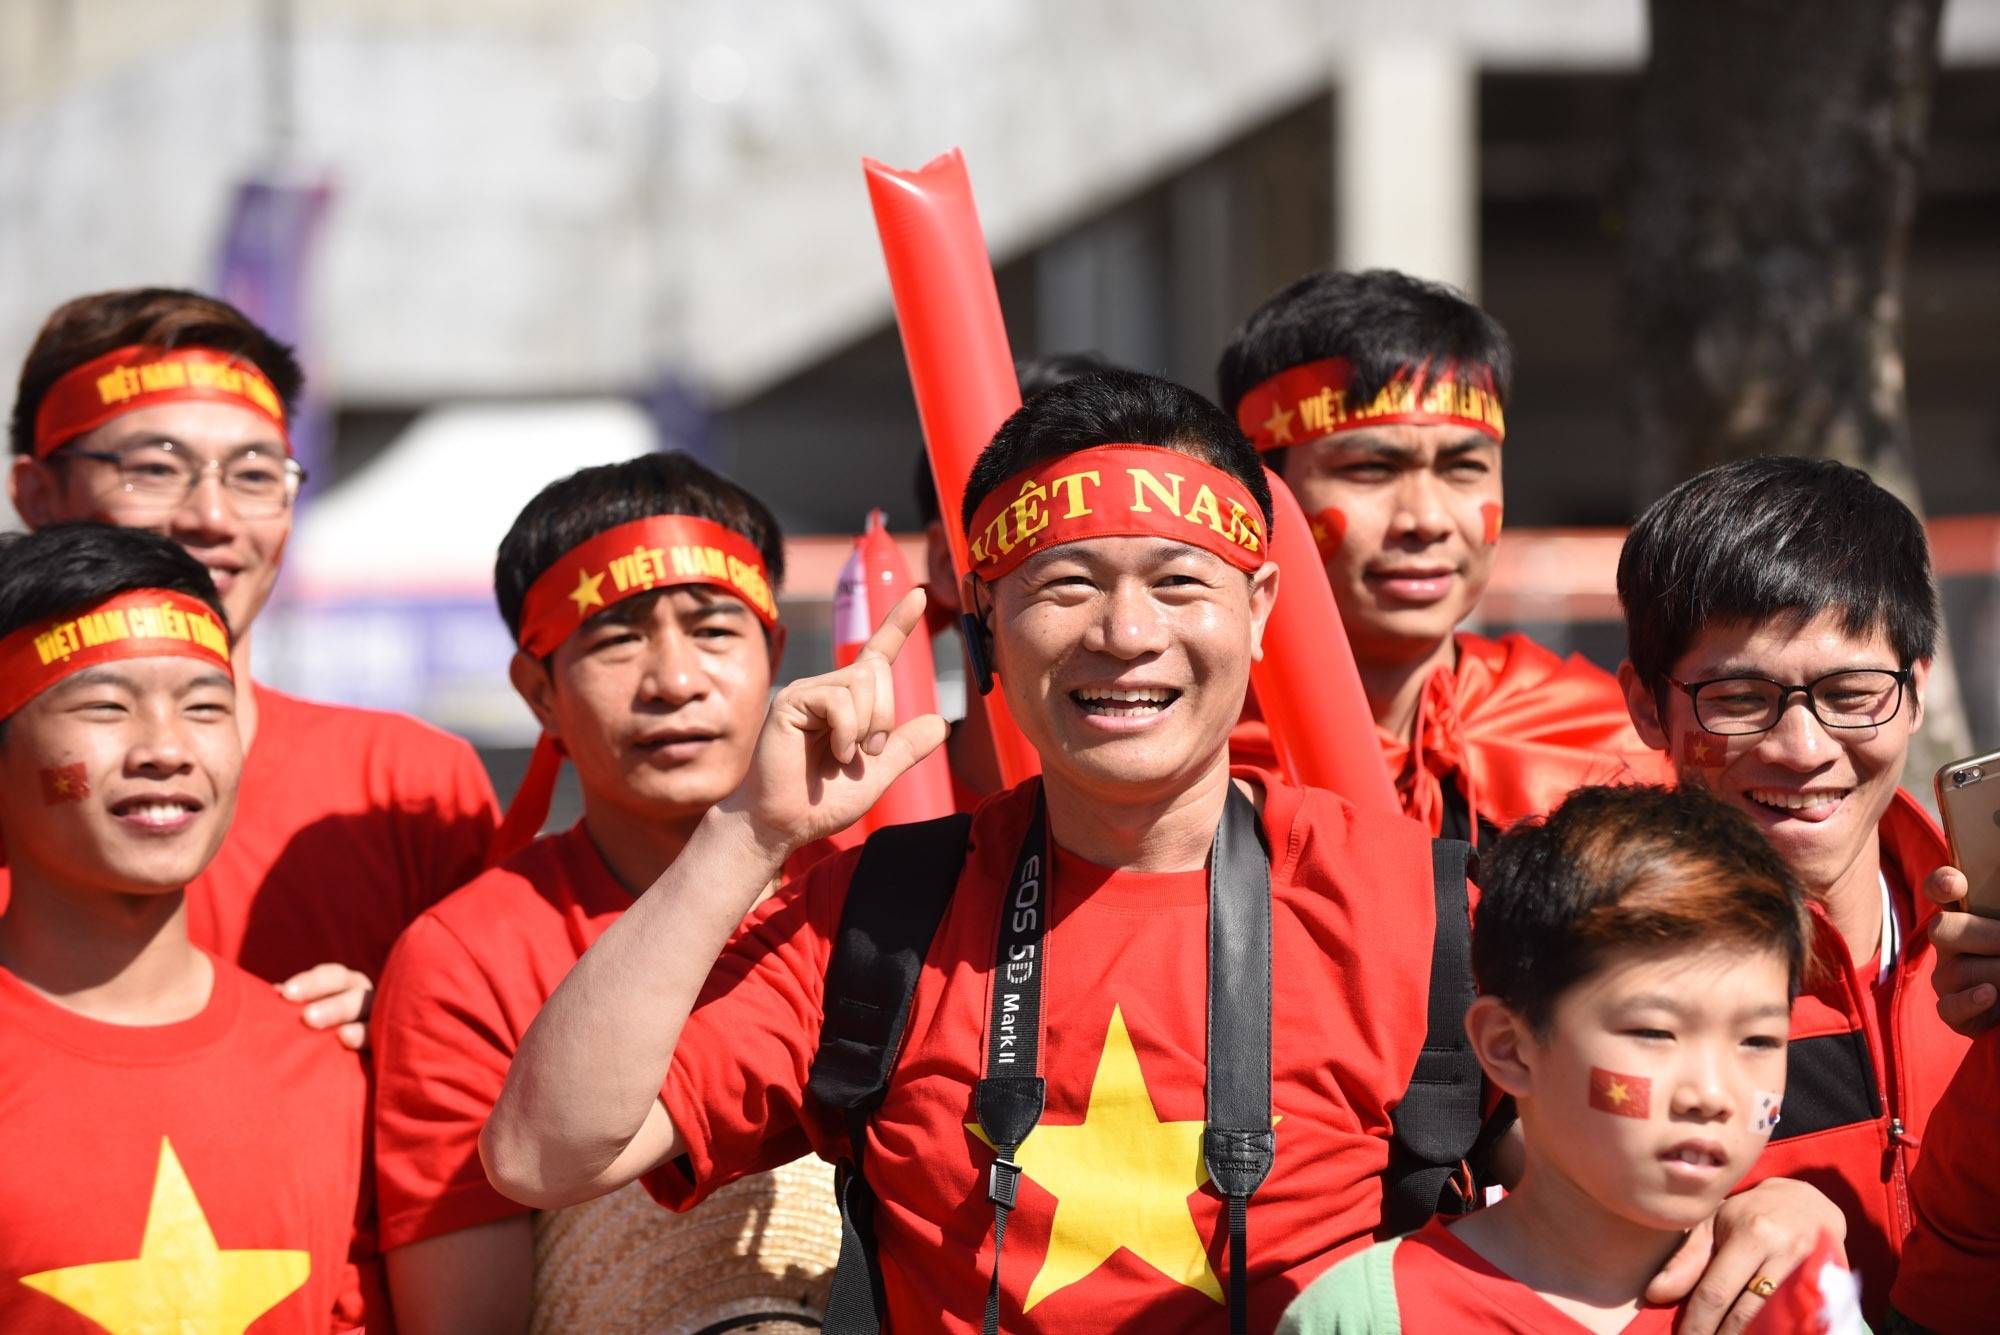 In Photos: Vietnam U-20 tasted defeat as France U-20 coast into next